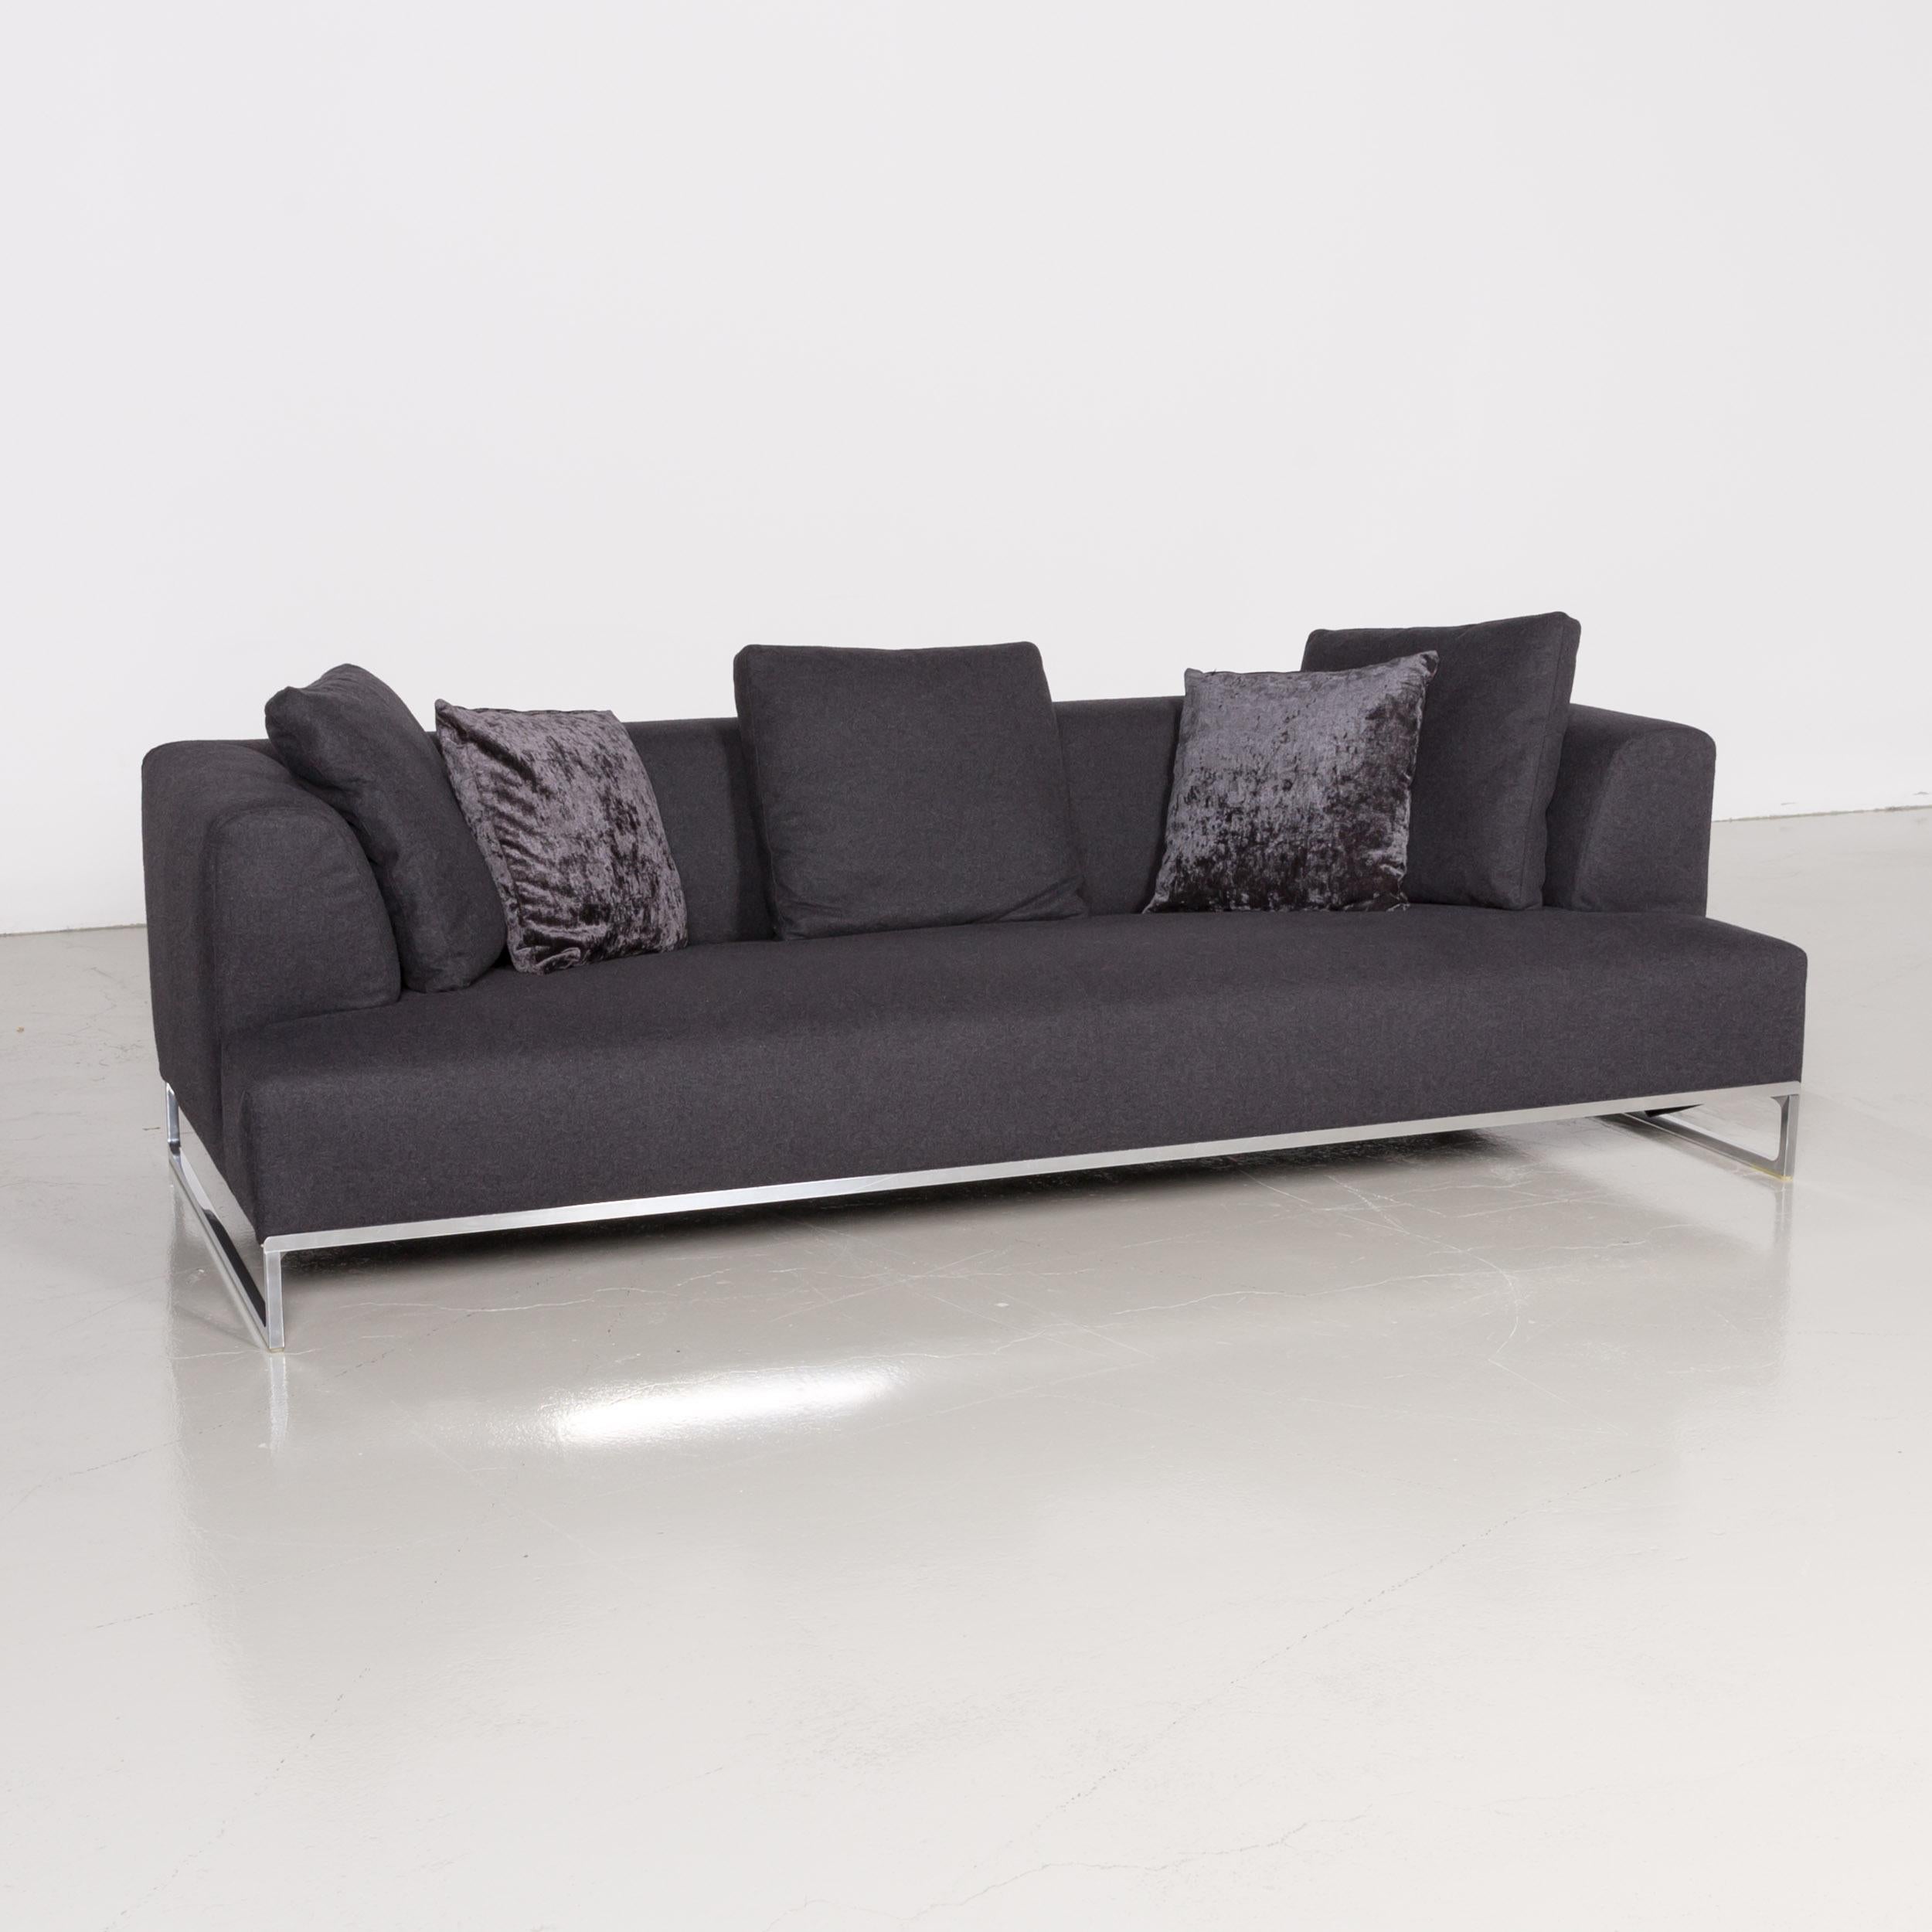 Italian B&B Italia Solo Fabric Designer Sofa Set Three-Seat Couch Stool Anthracite Grey